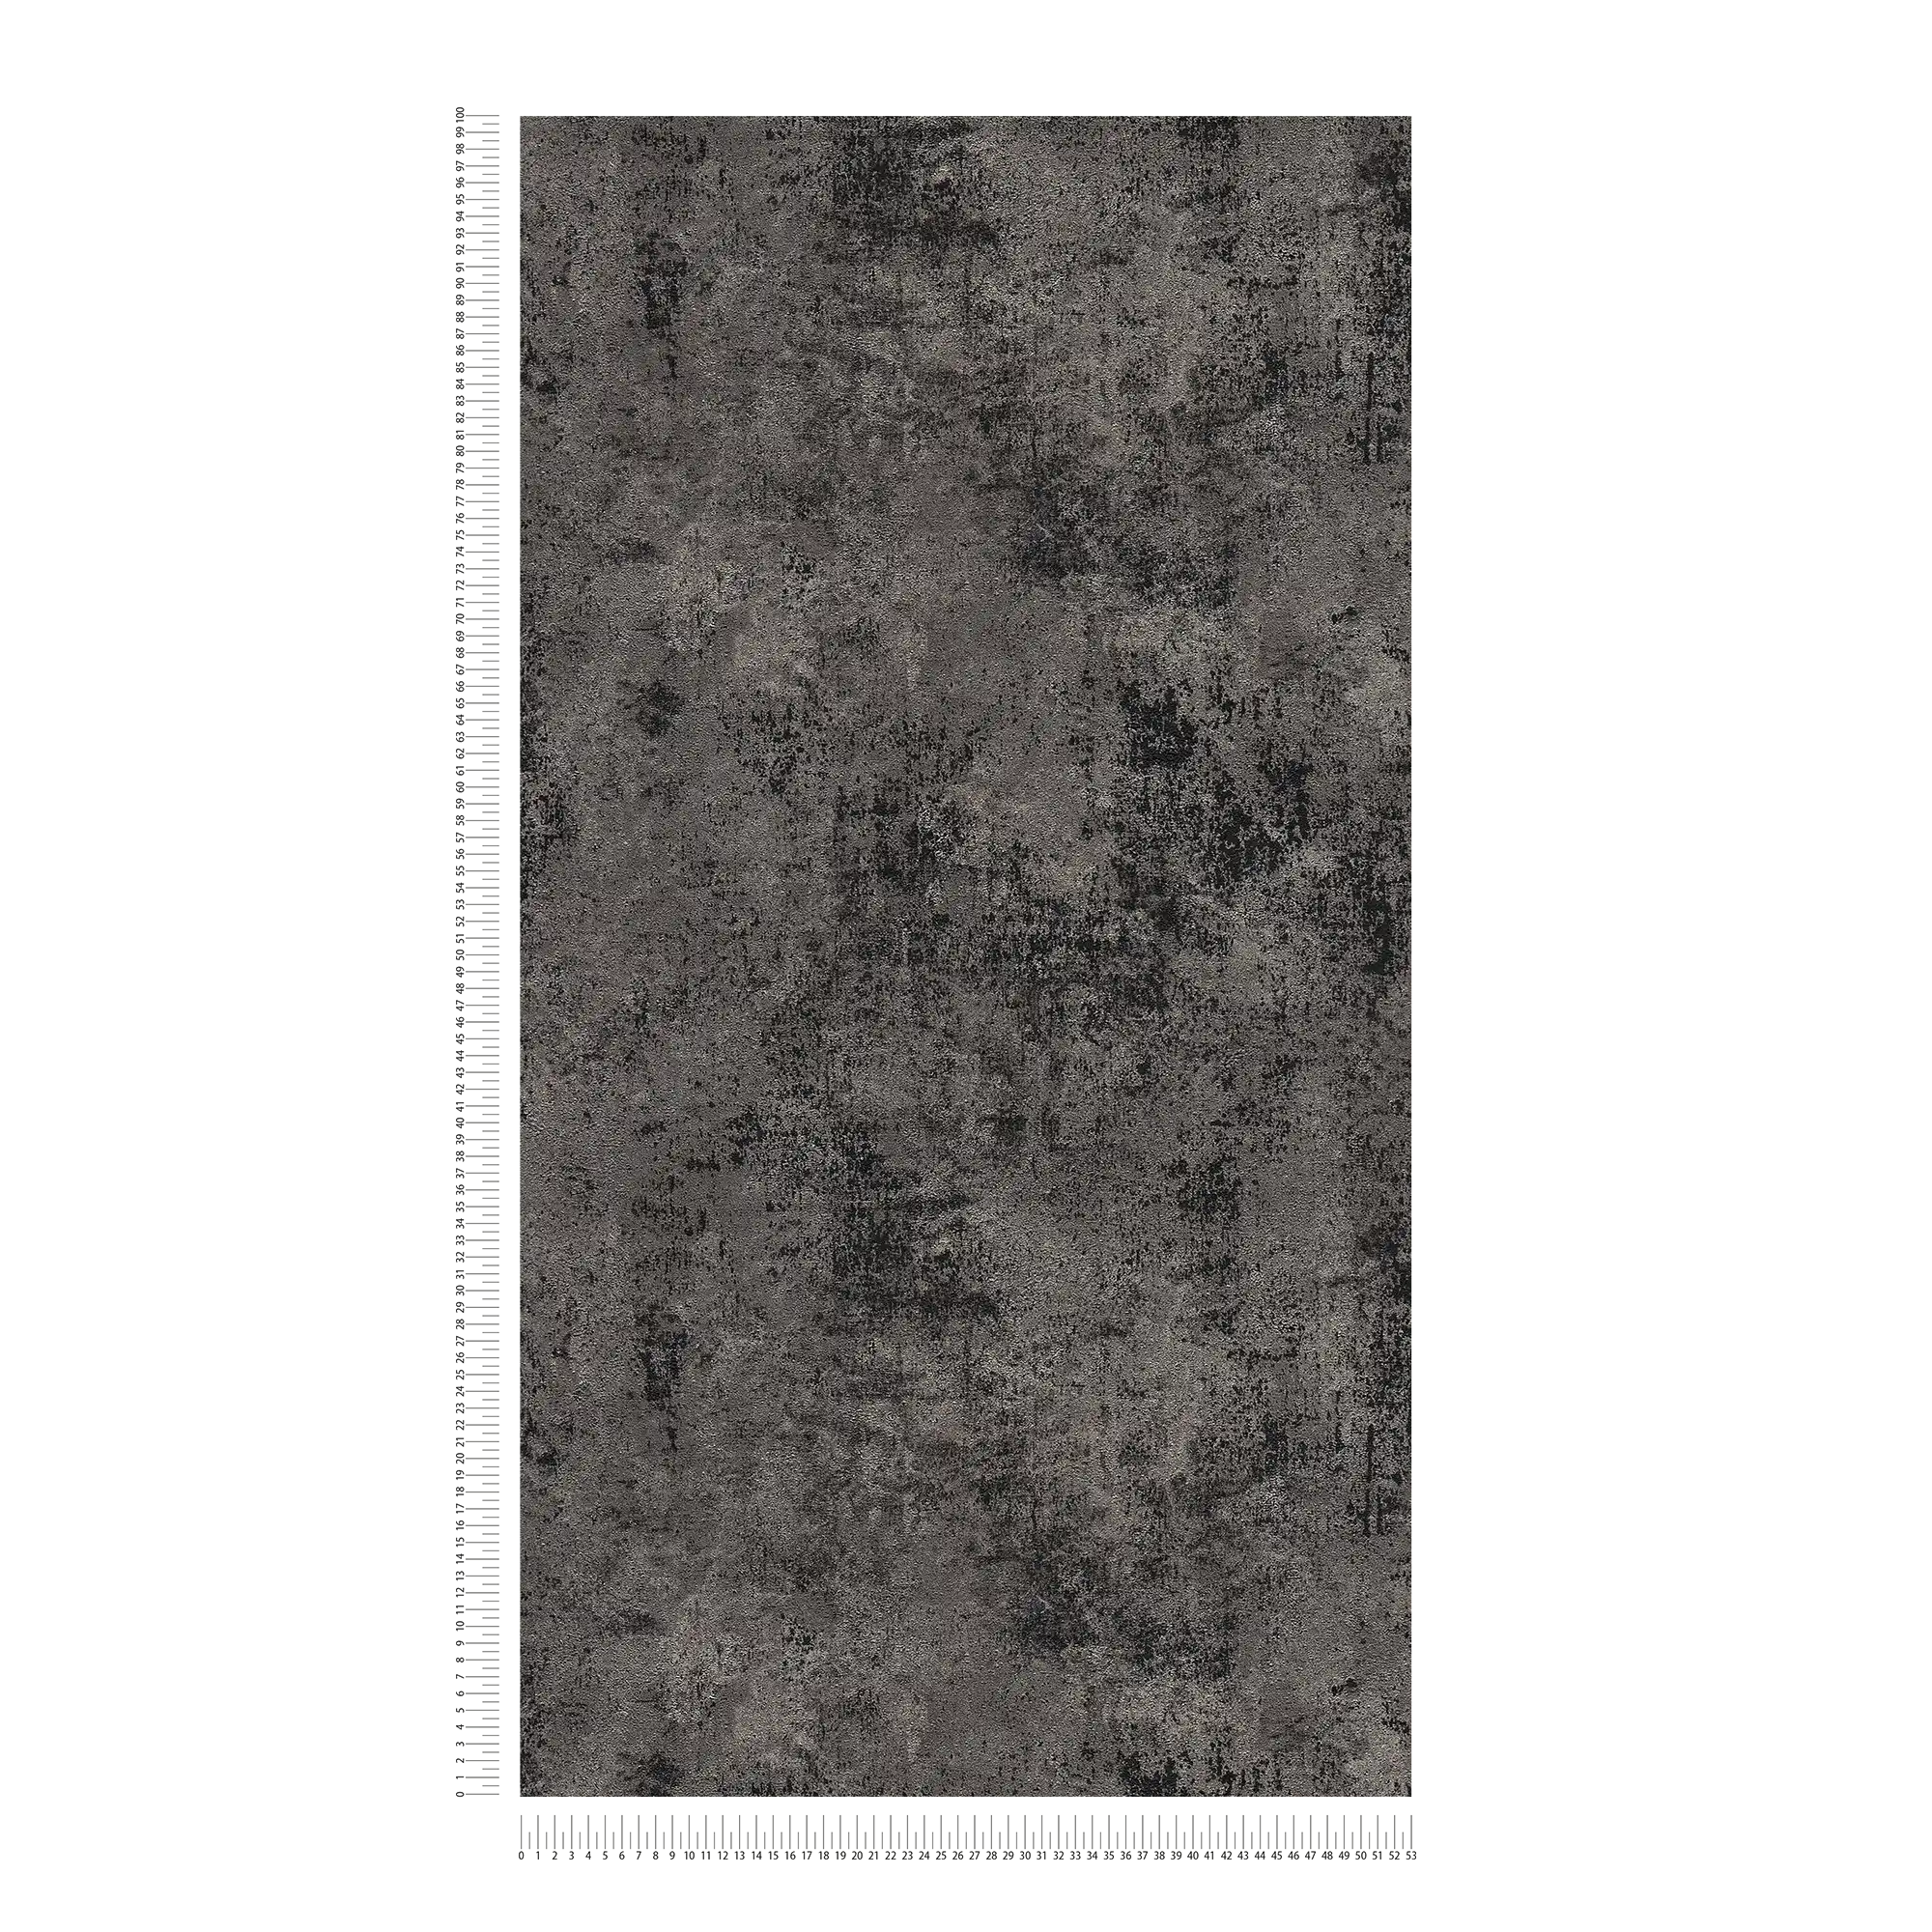             Papel pintado no tejido oscuro estructura rústica - negro, plata
        